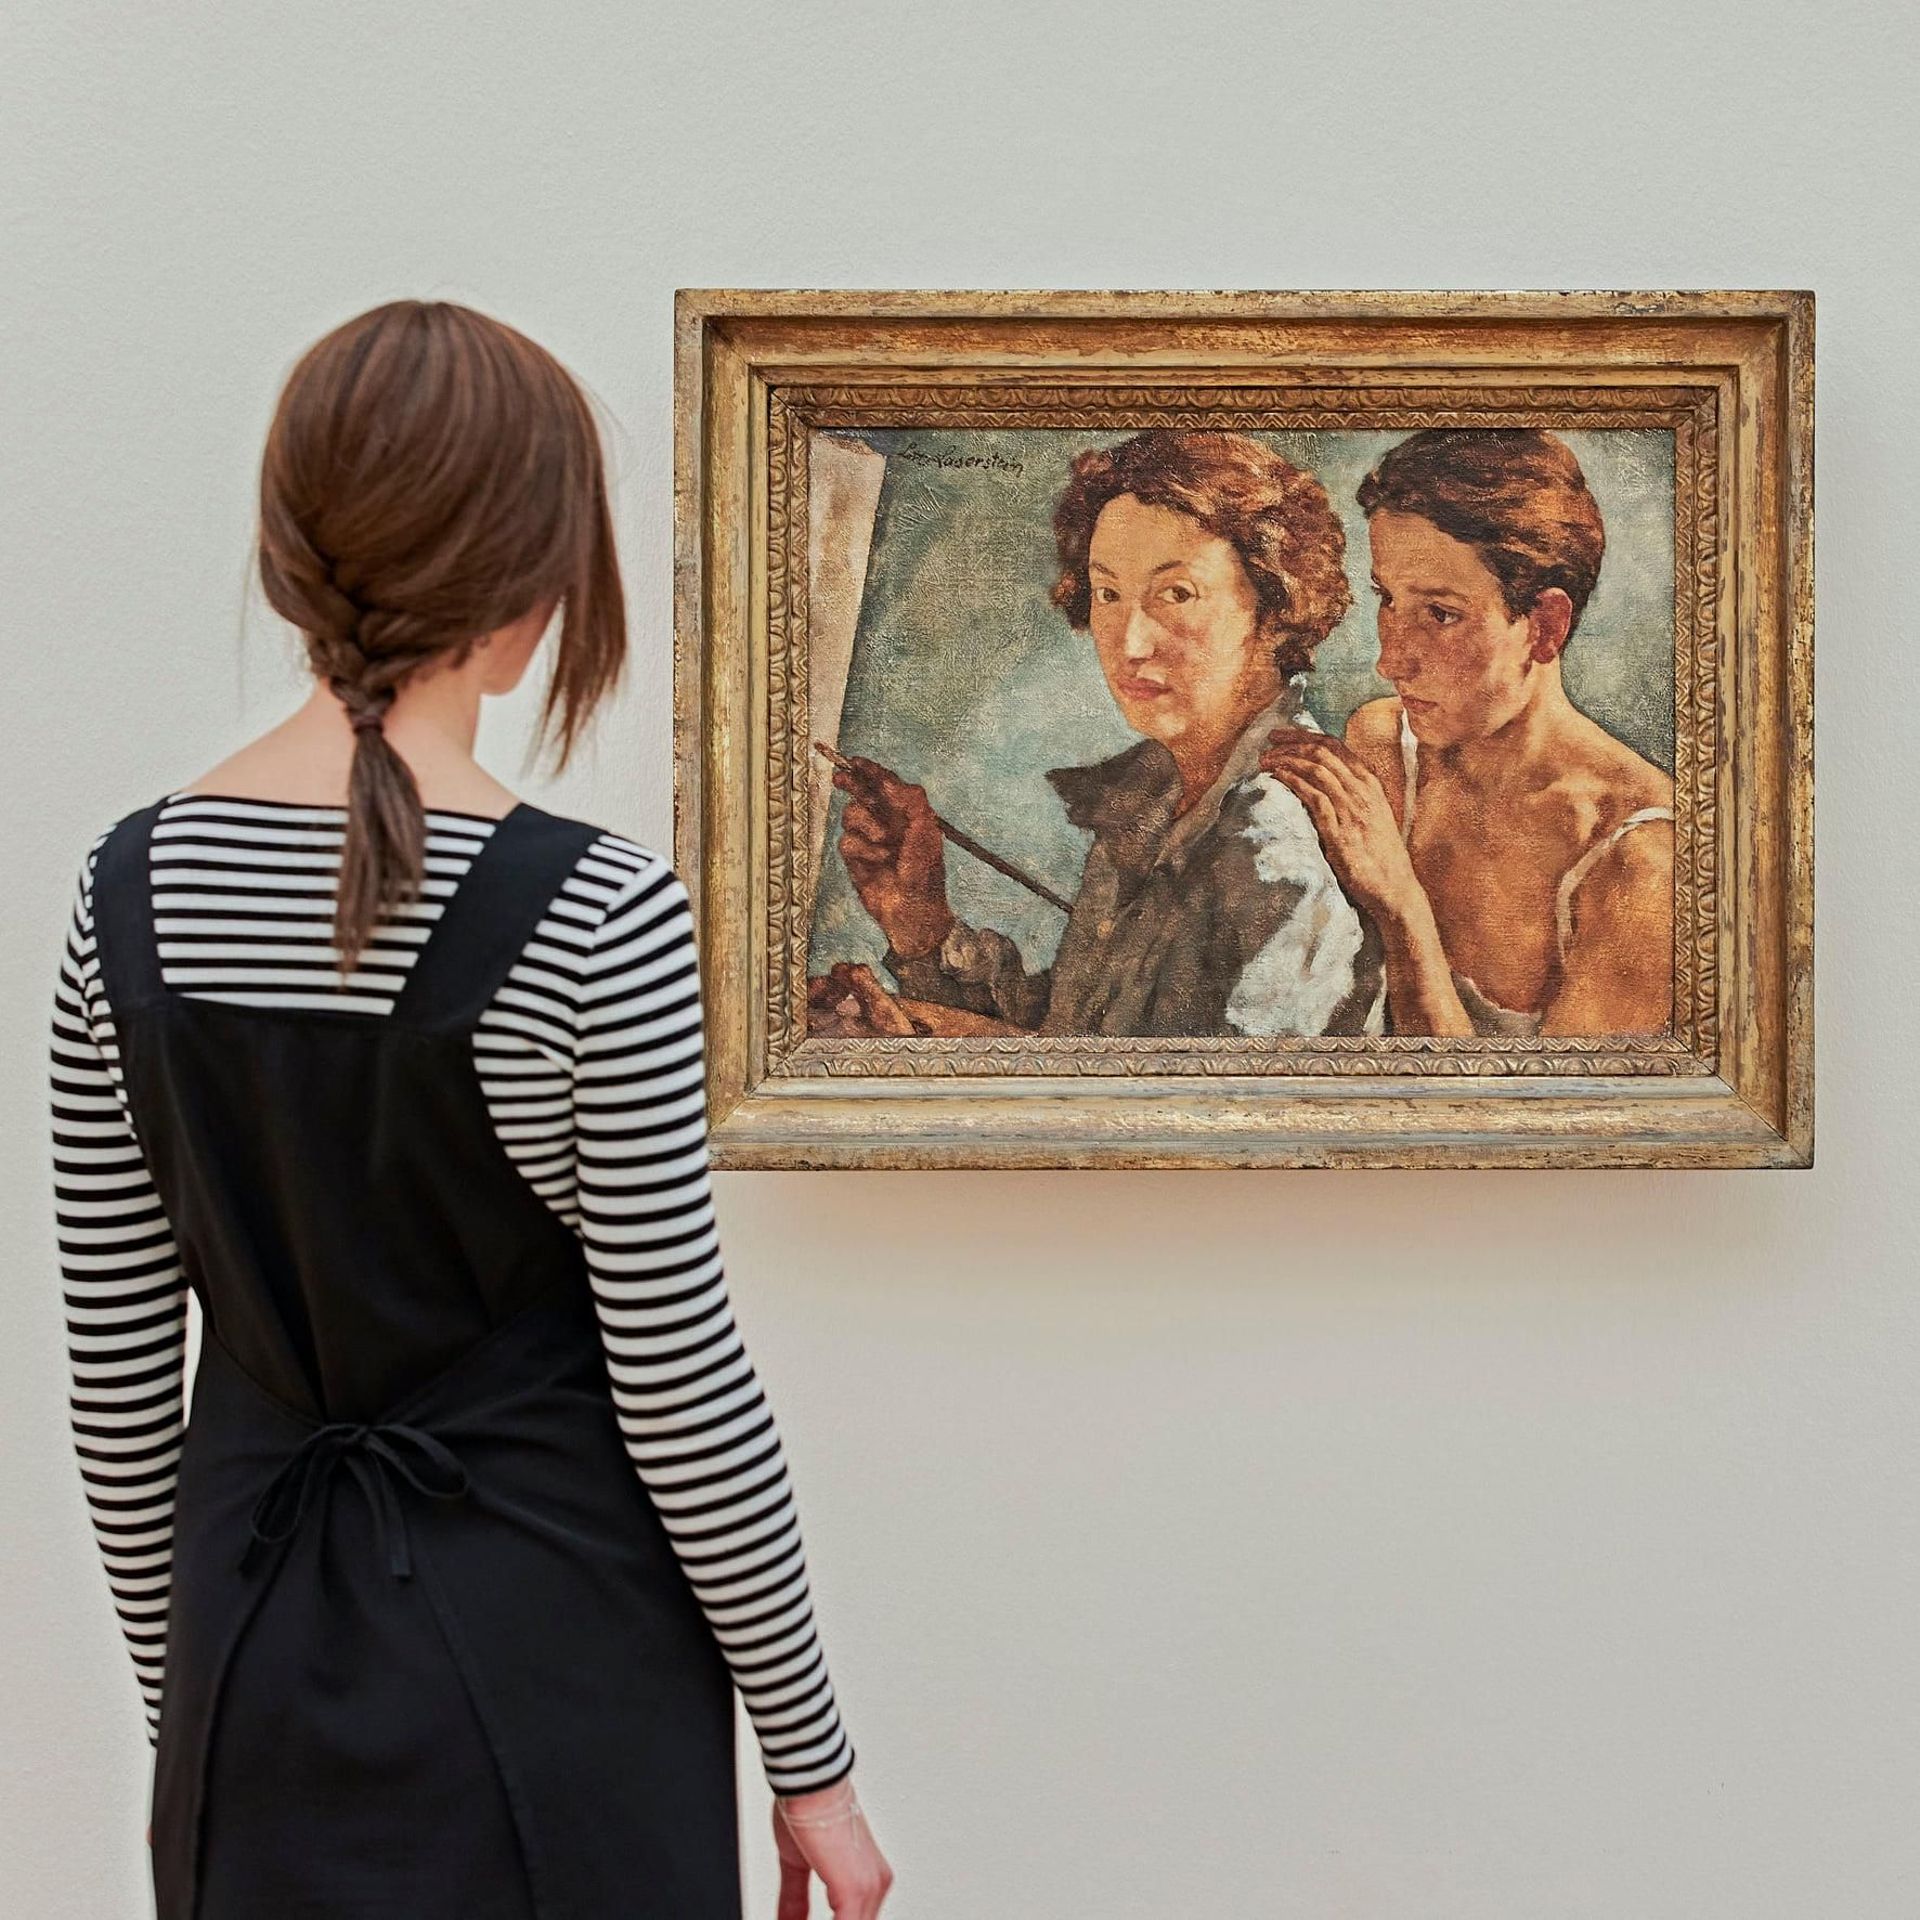 Lotte Laserstein, ′′ Ich und mein Modell ", 1929-2030, huile sur toile, 49.5 x 69.5 cm, Collection familiale privée.